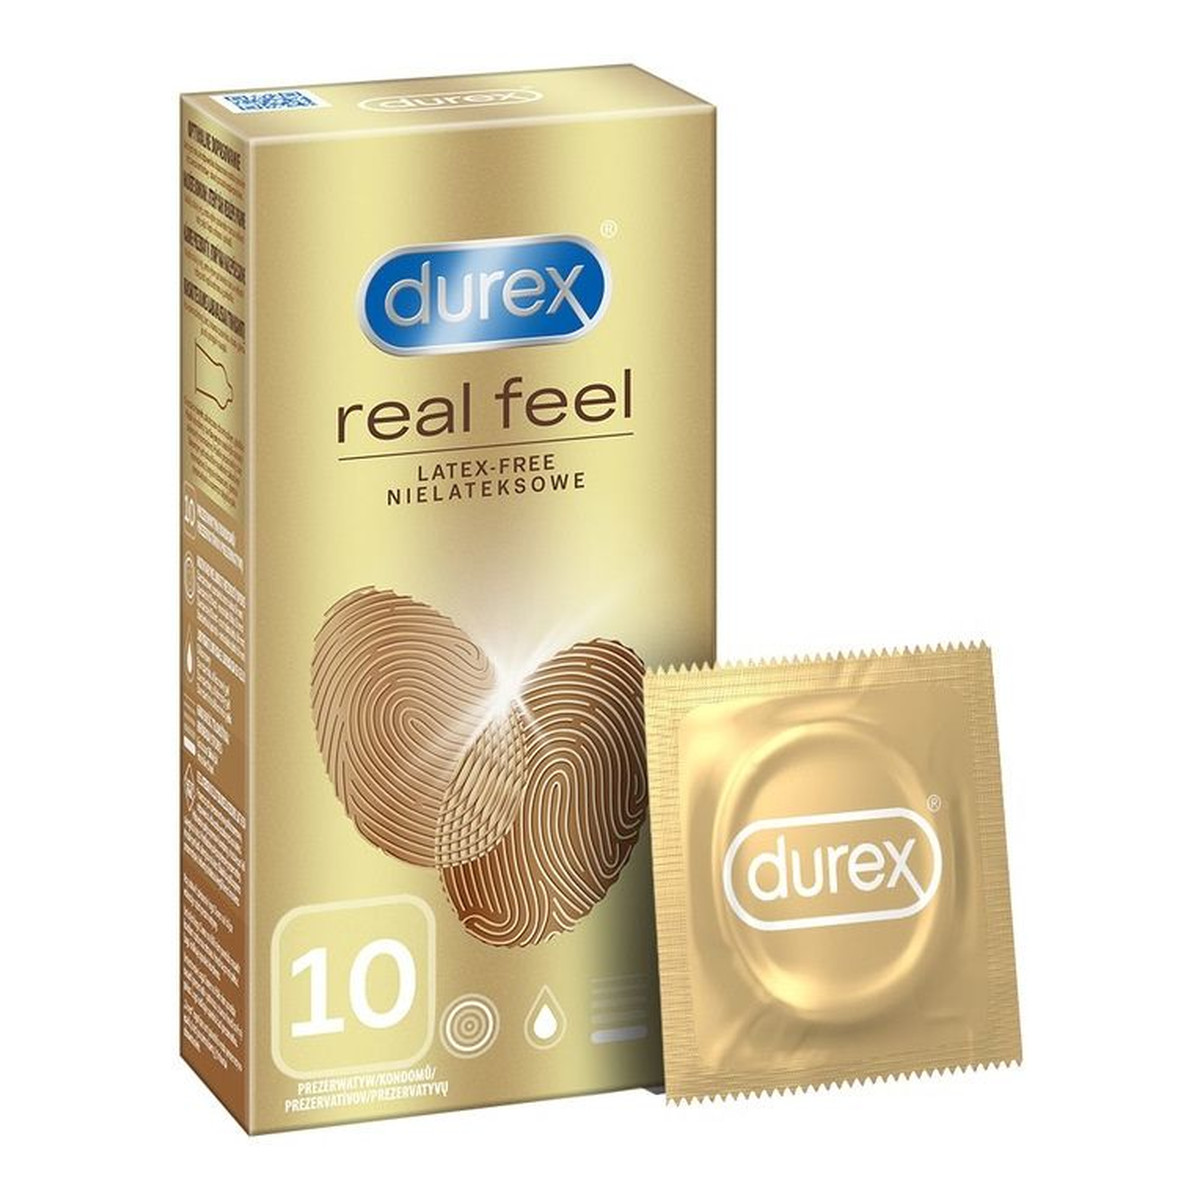 Durex RealFeel Natural Skin Feeling prezerwatywy nielateksowe 10szt